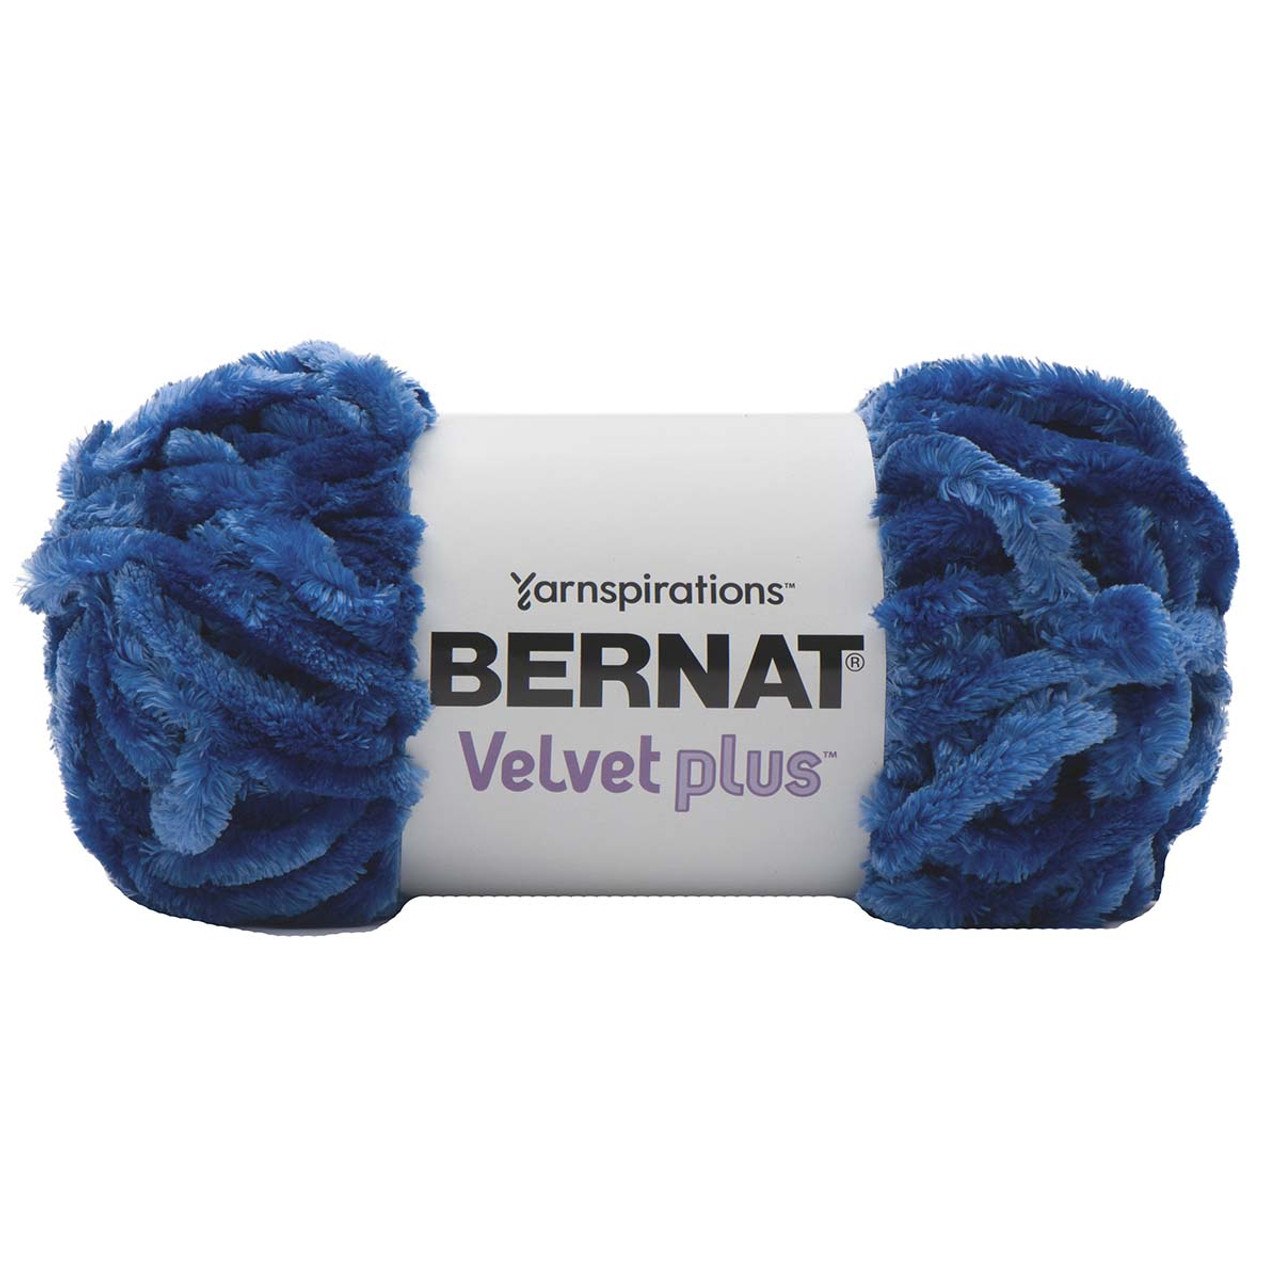 Bernat Velvet - 300g  Needle & Hook Crafts